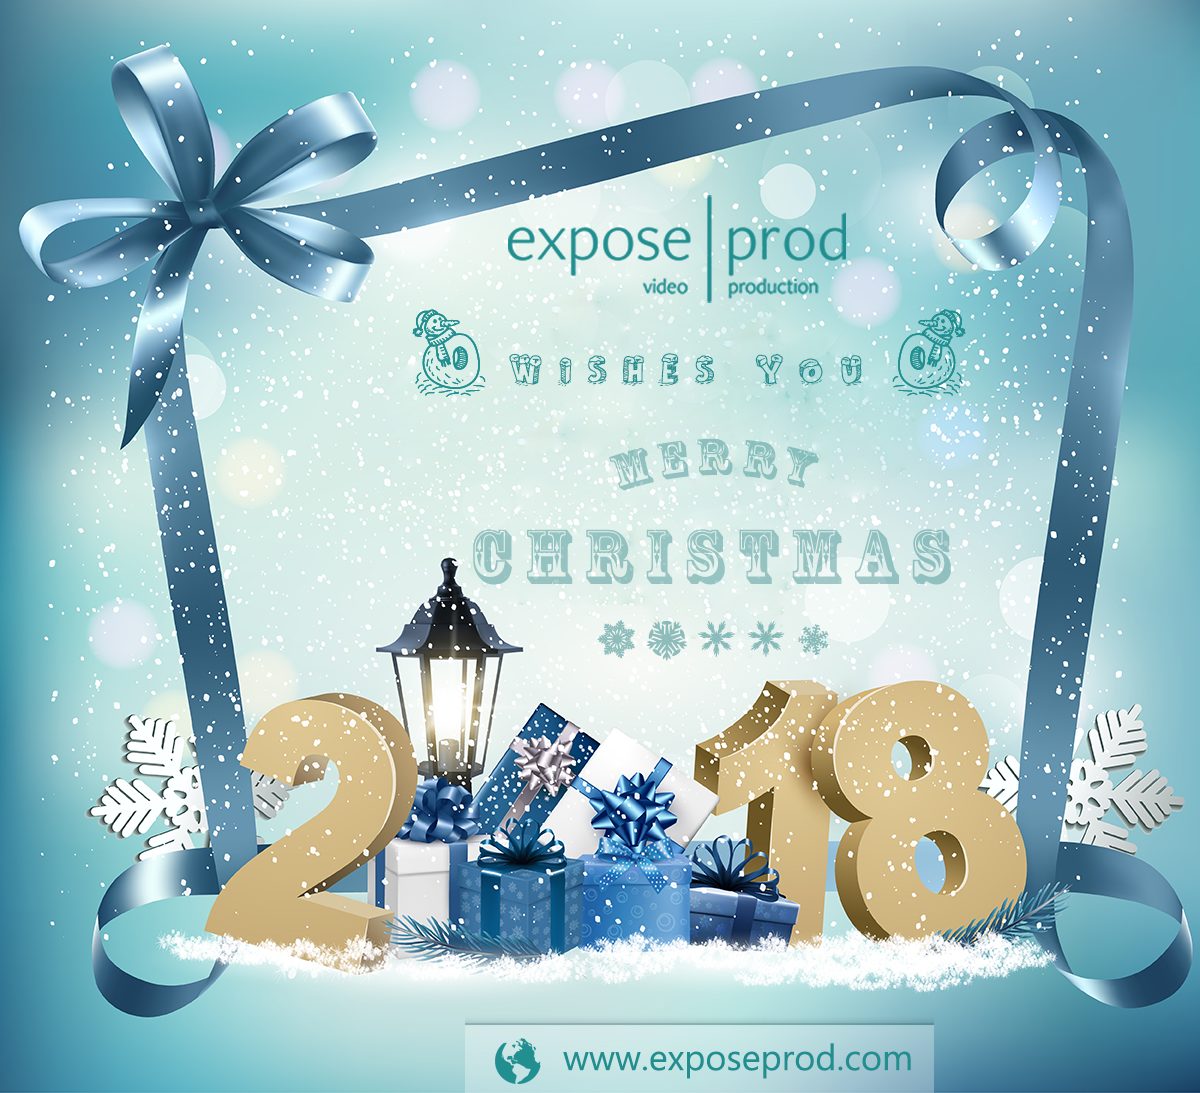 ExposeProd-Christmas-Spirit